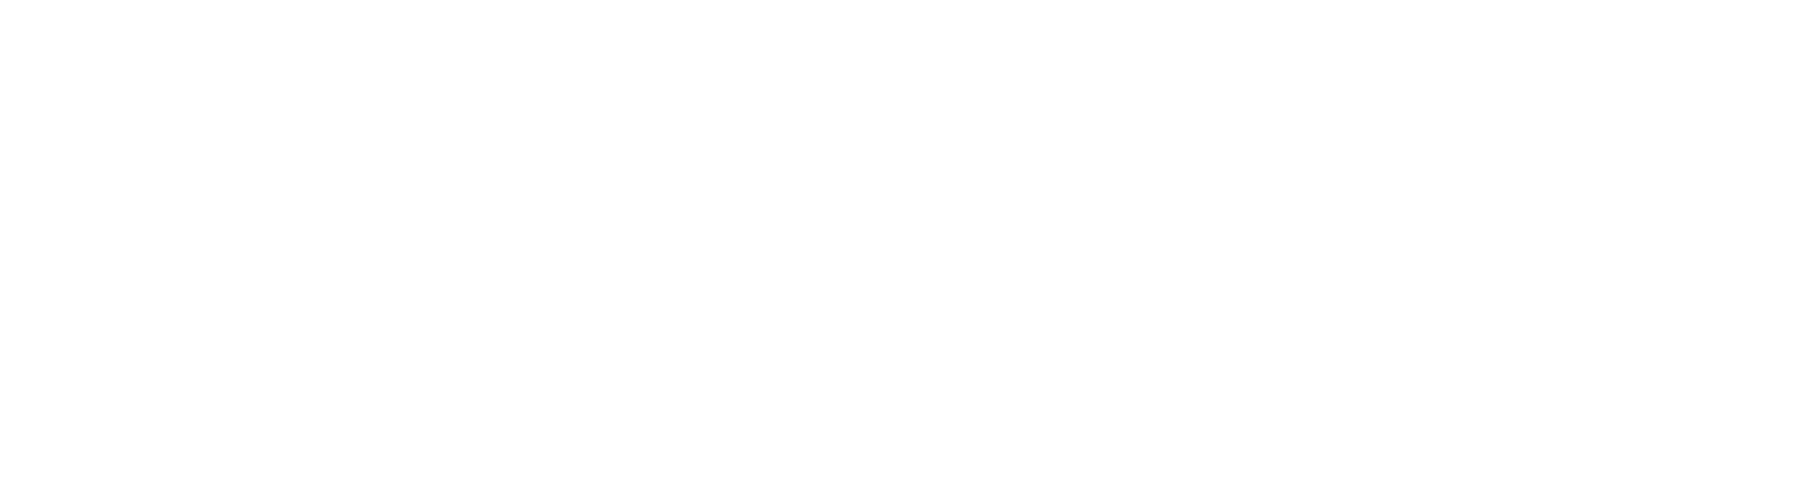 vmix-mob